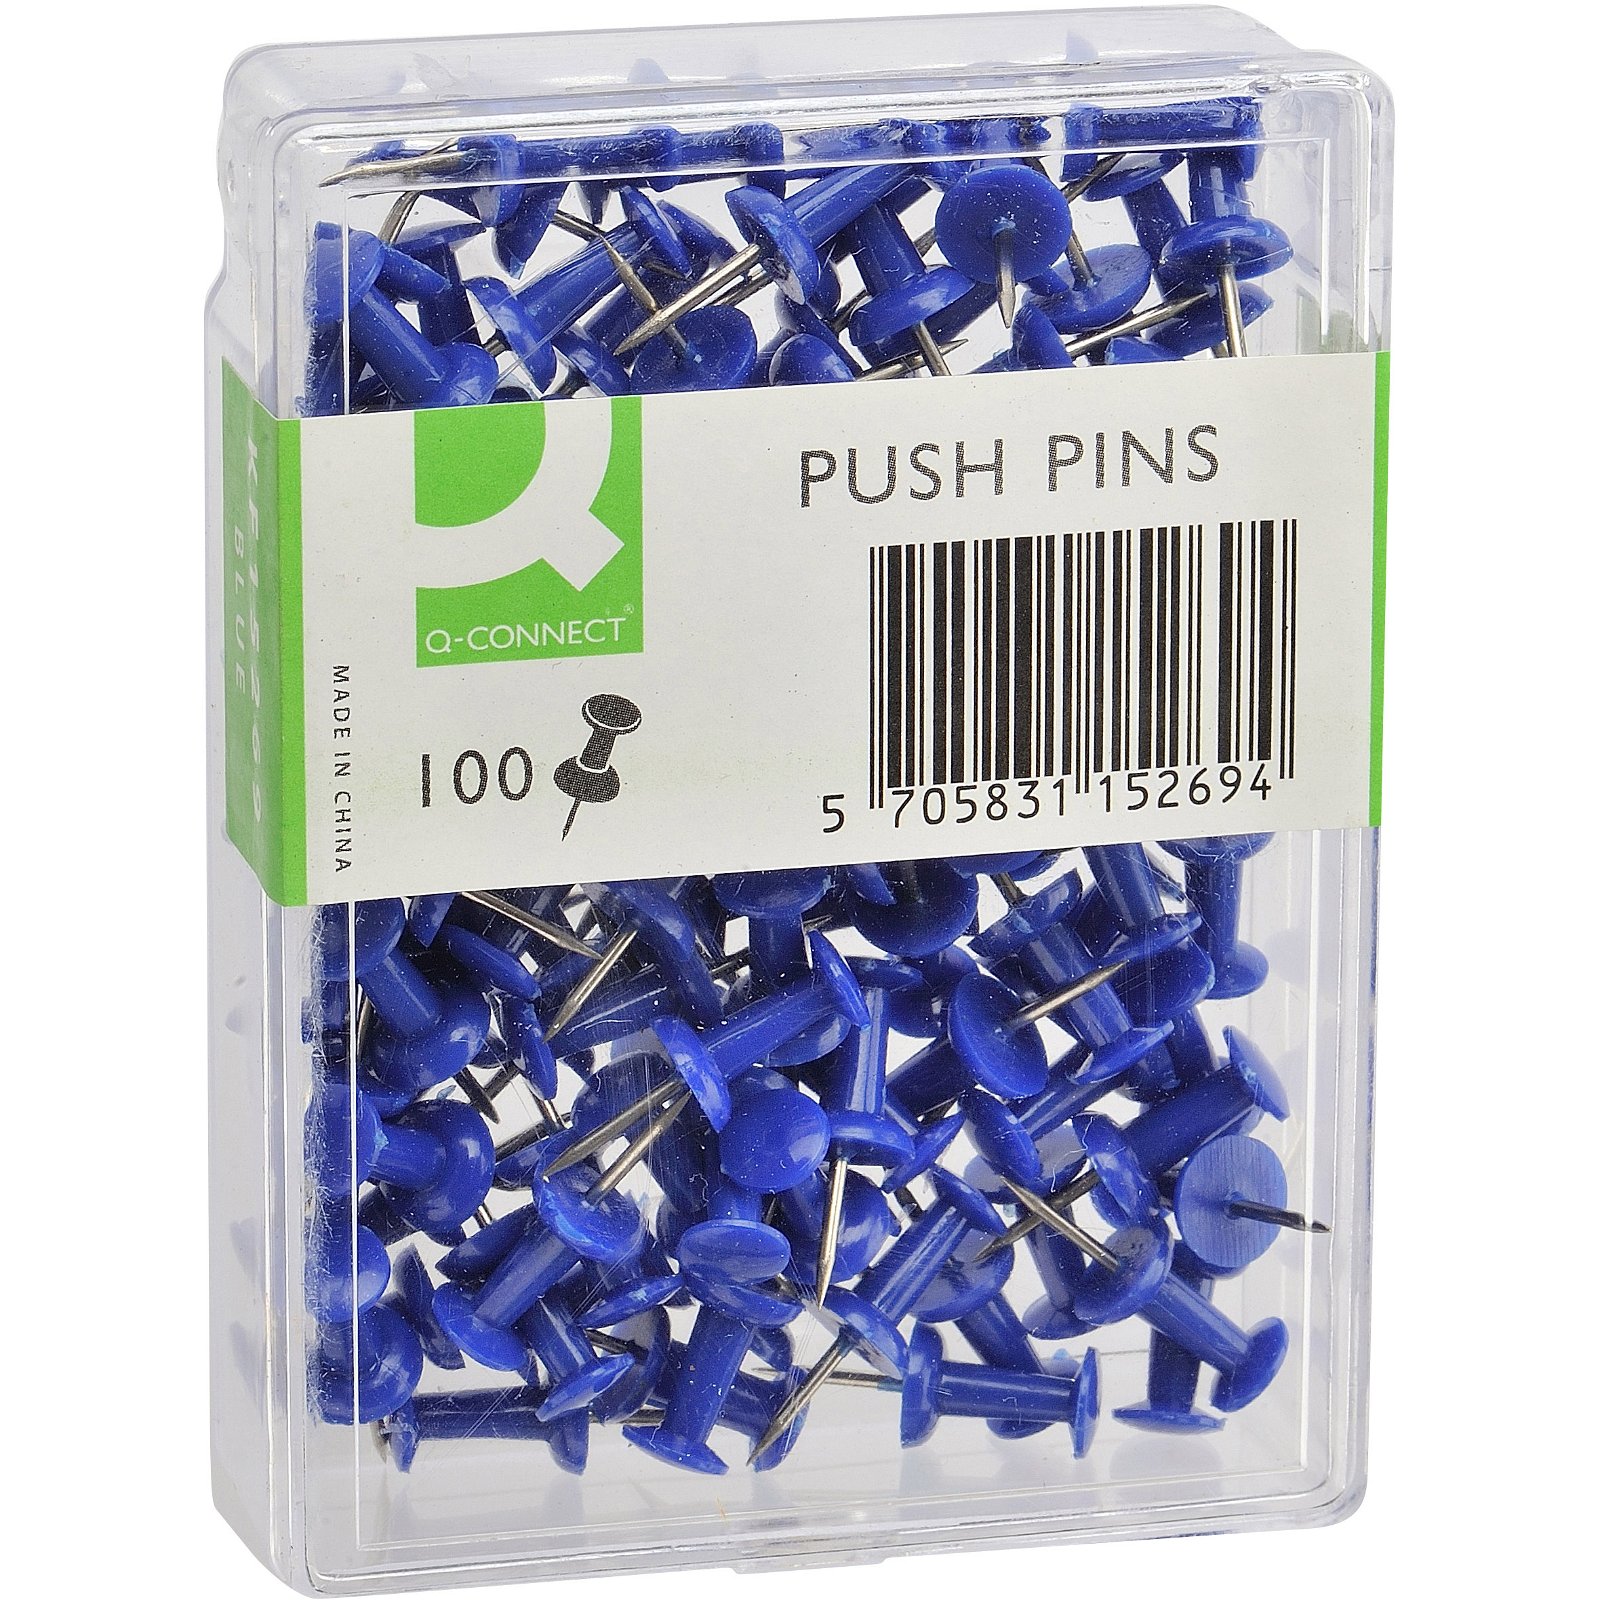 Q-connect push pins